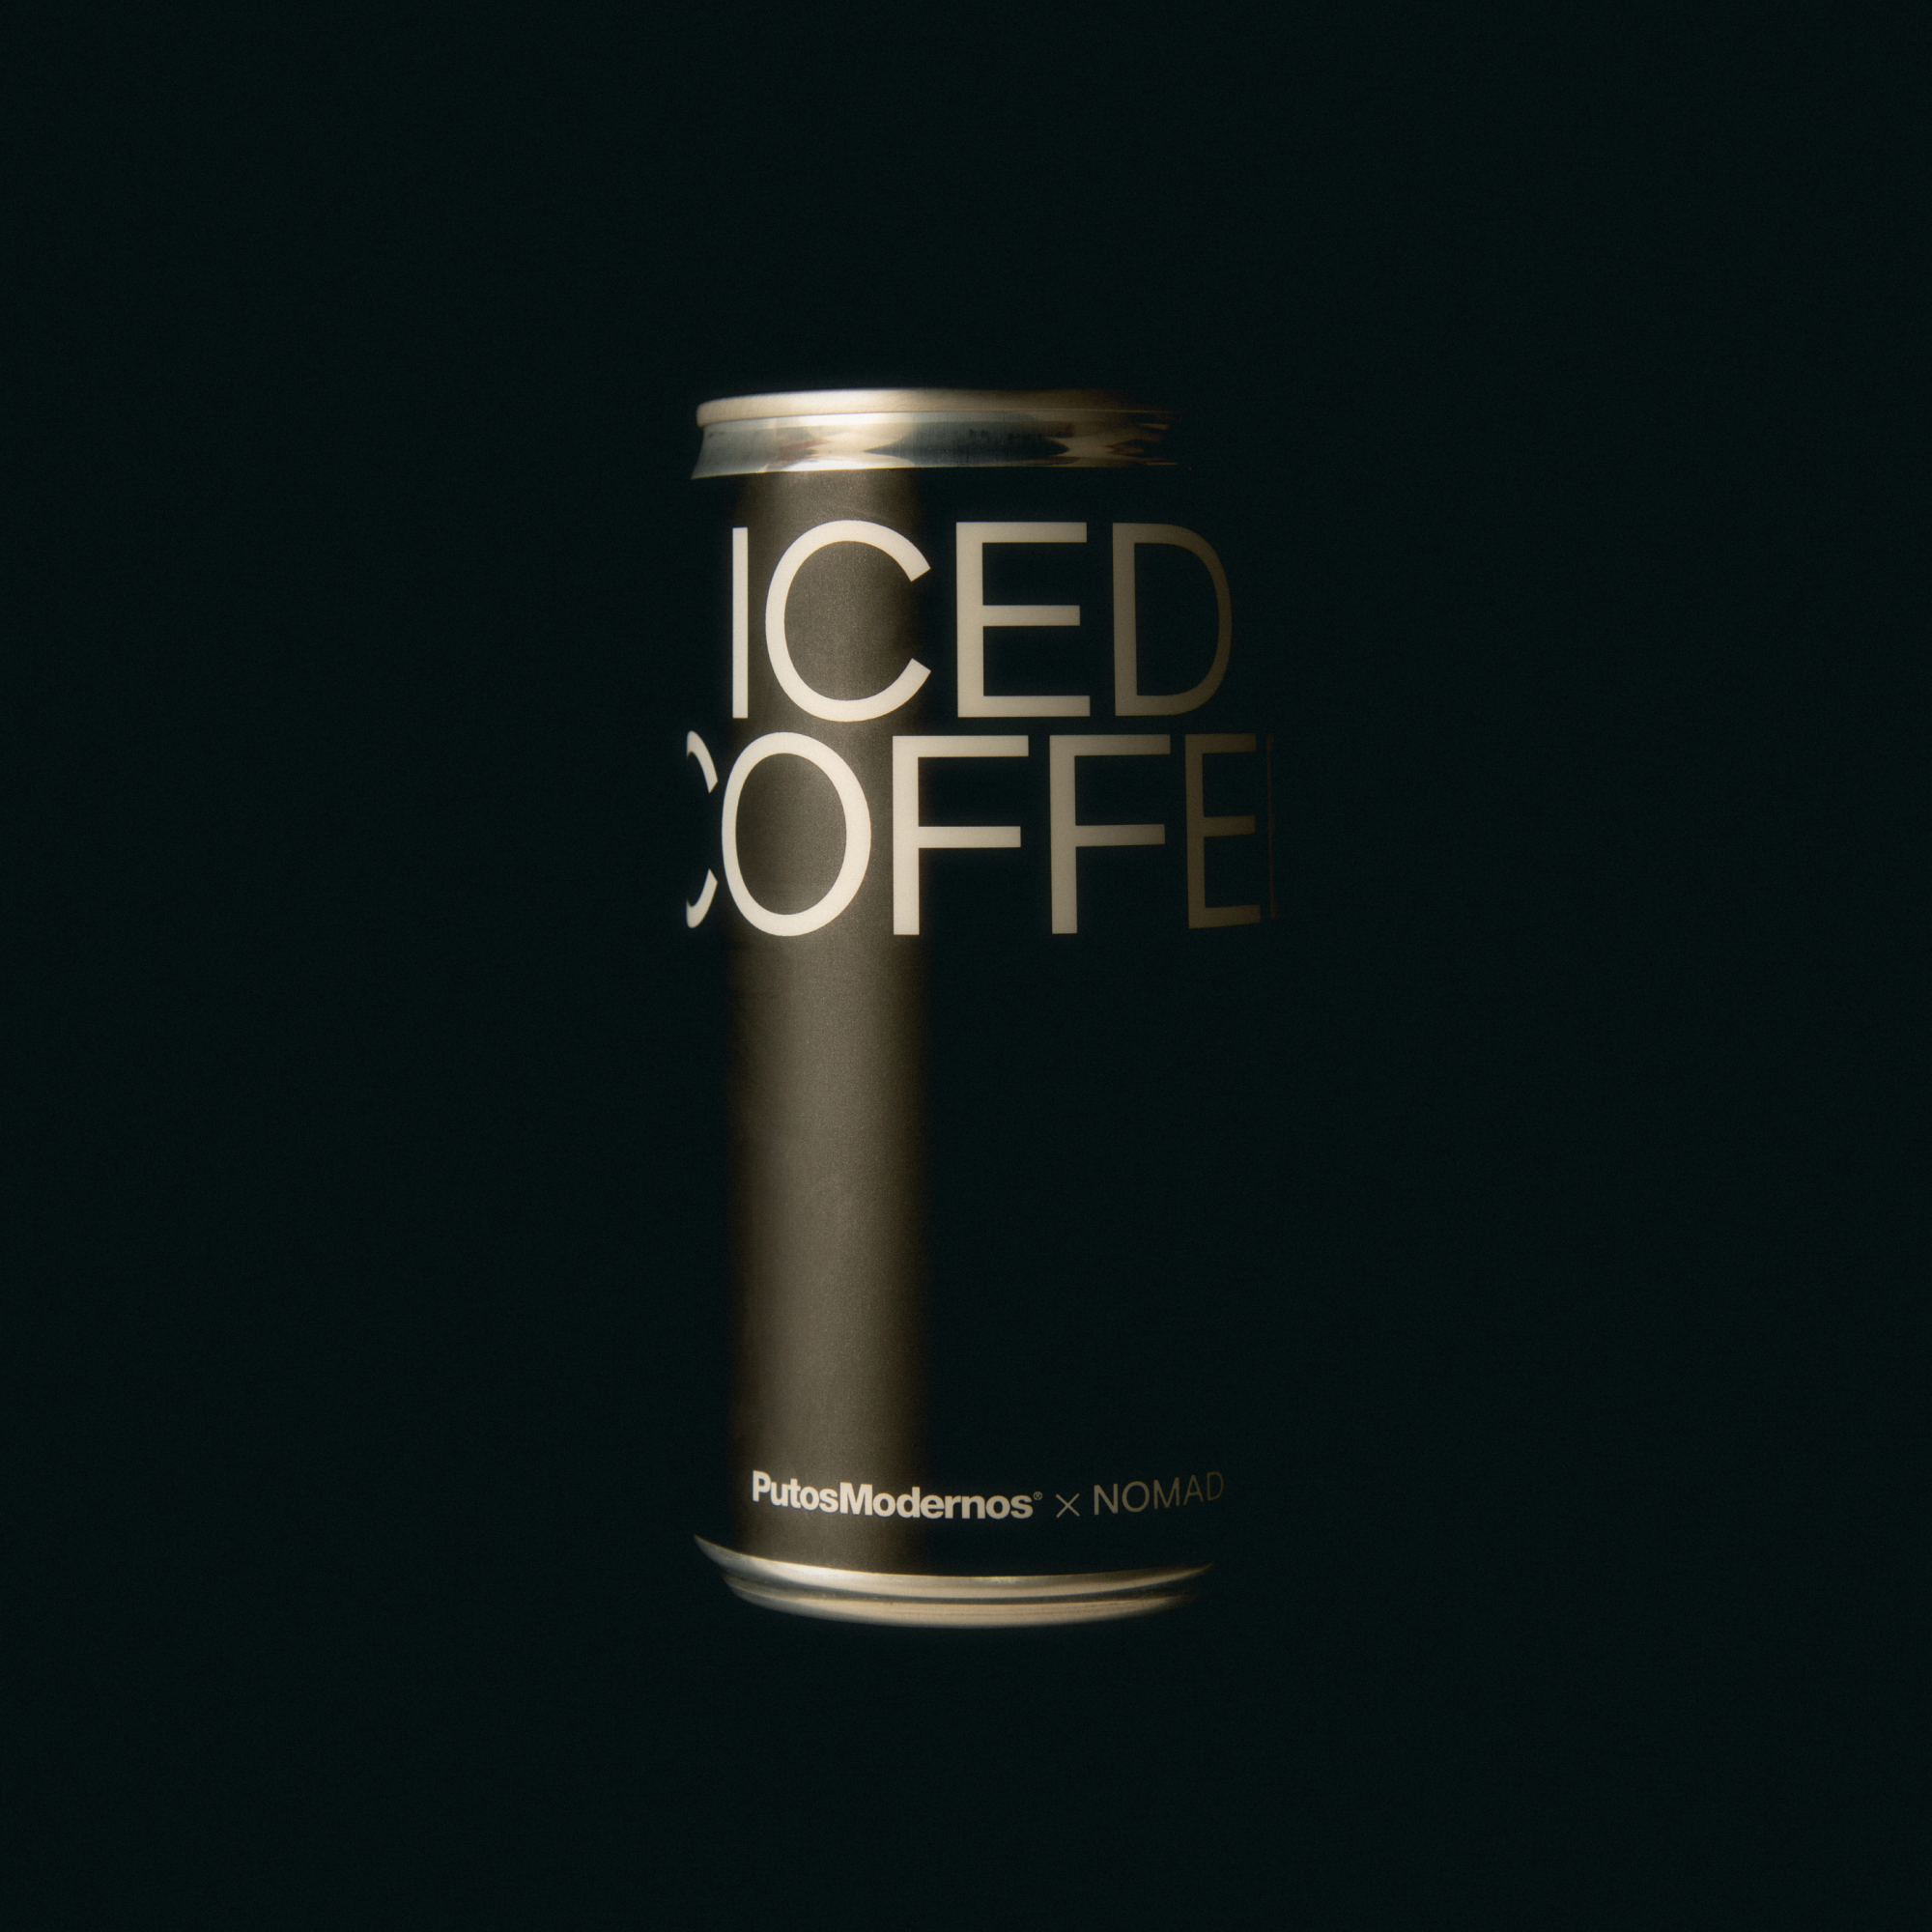 ICED COFFEE<br>LATA